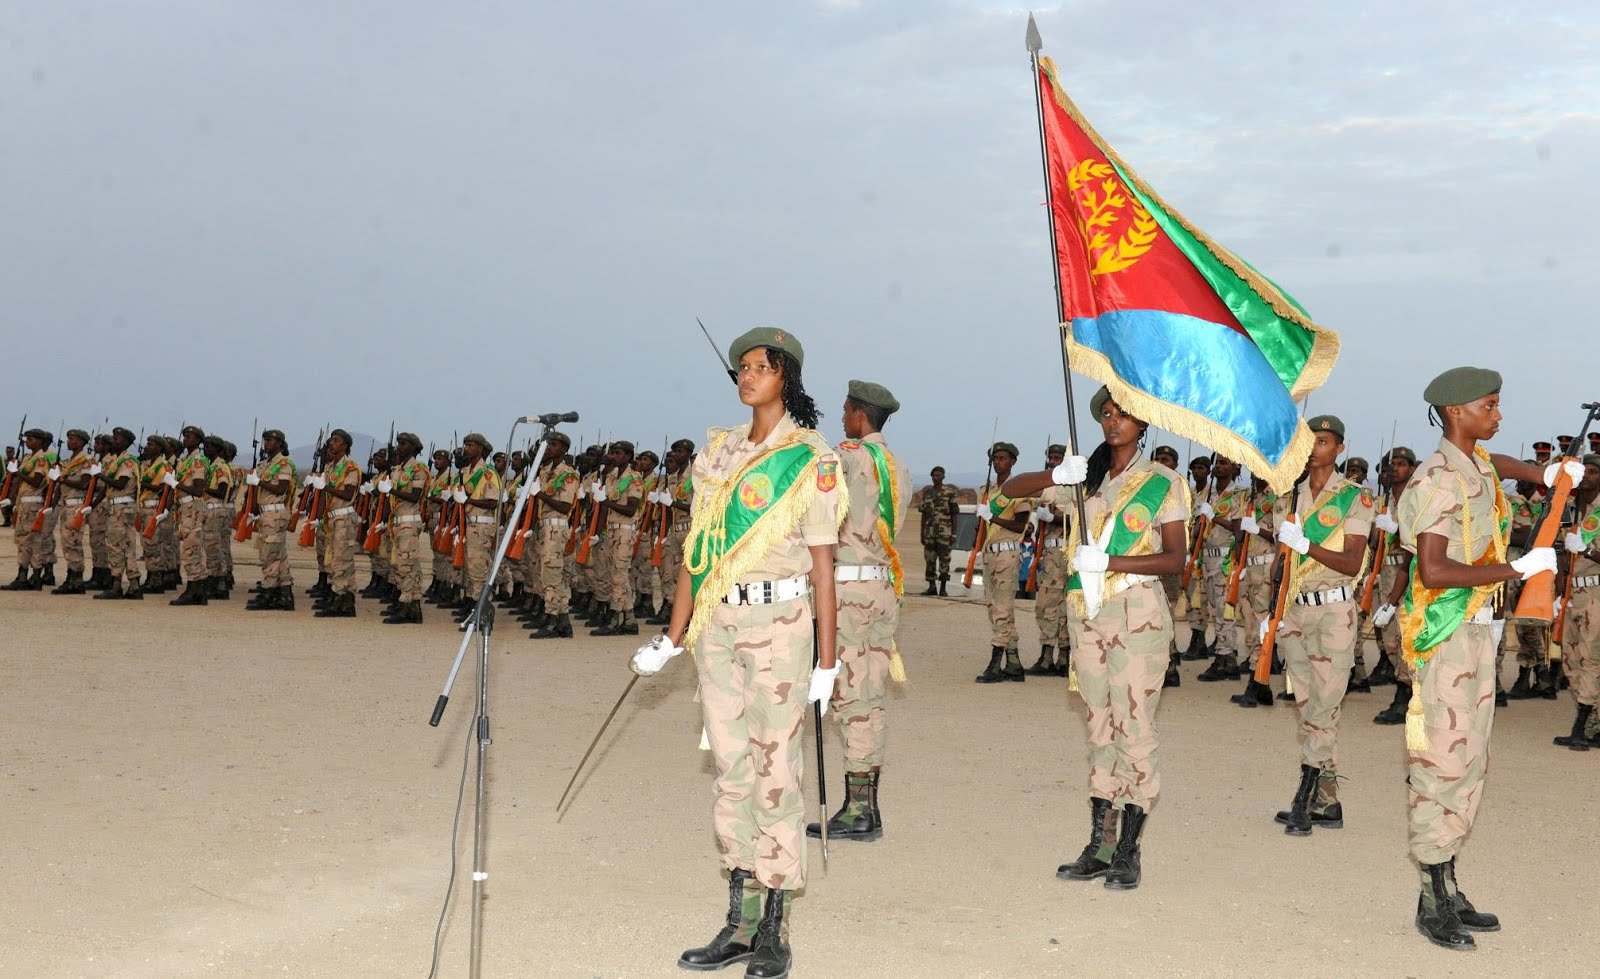  Sawa Eritrea  s Cultural Boot Camp Madote